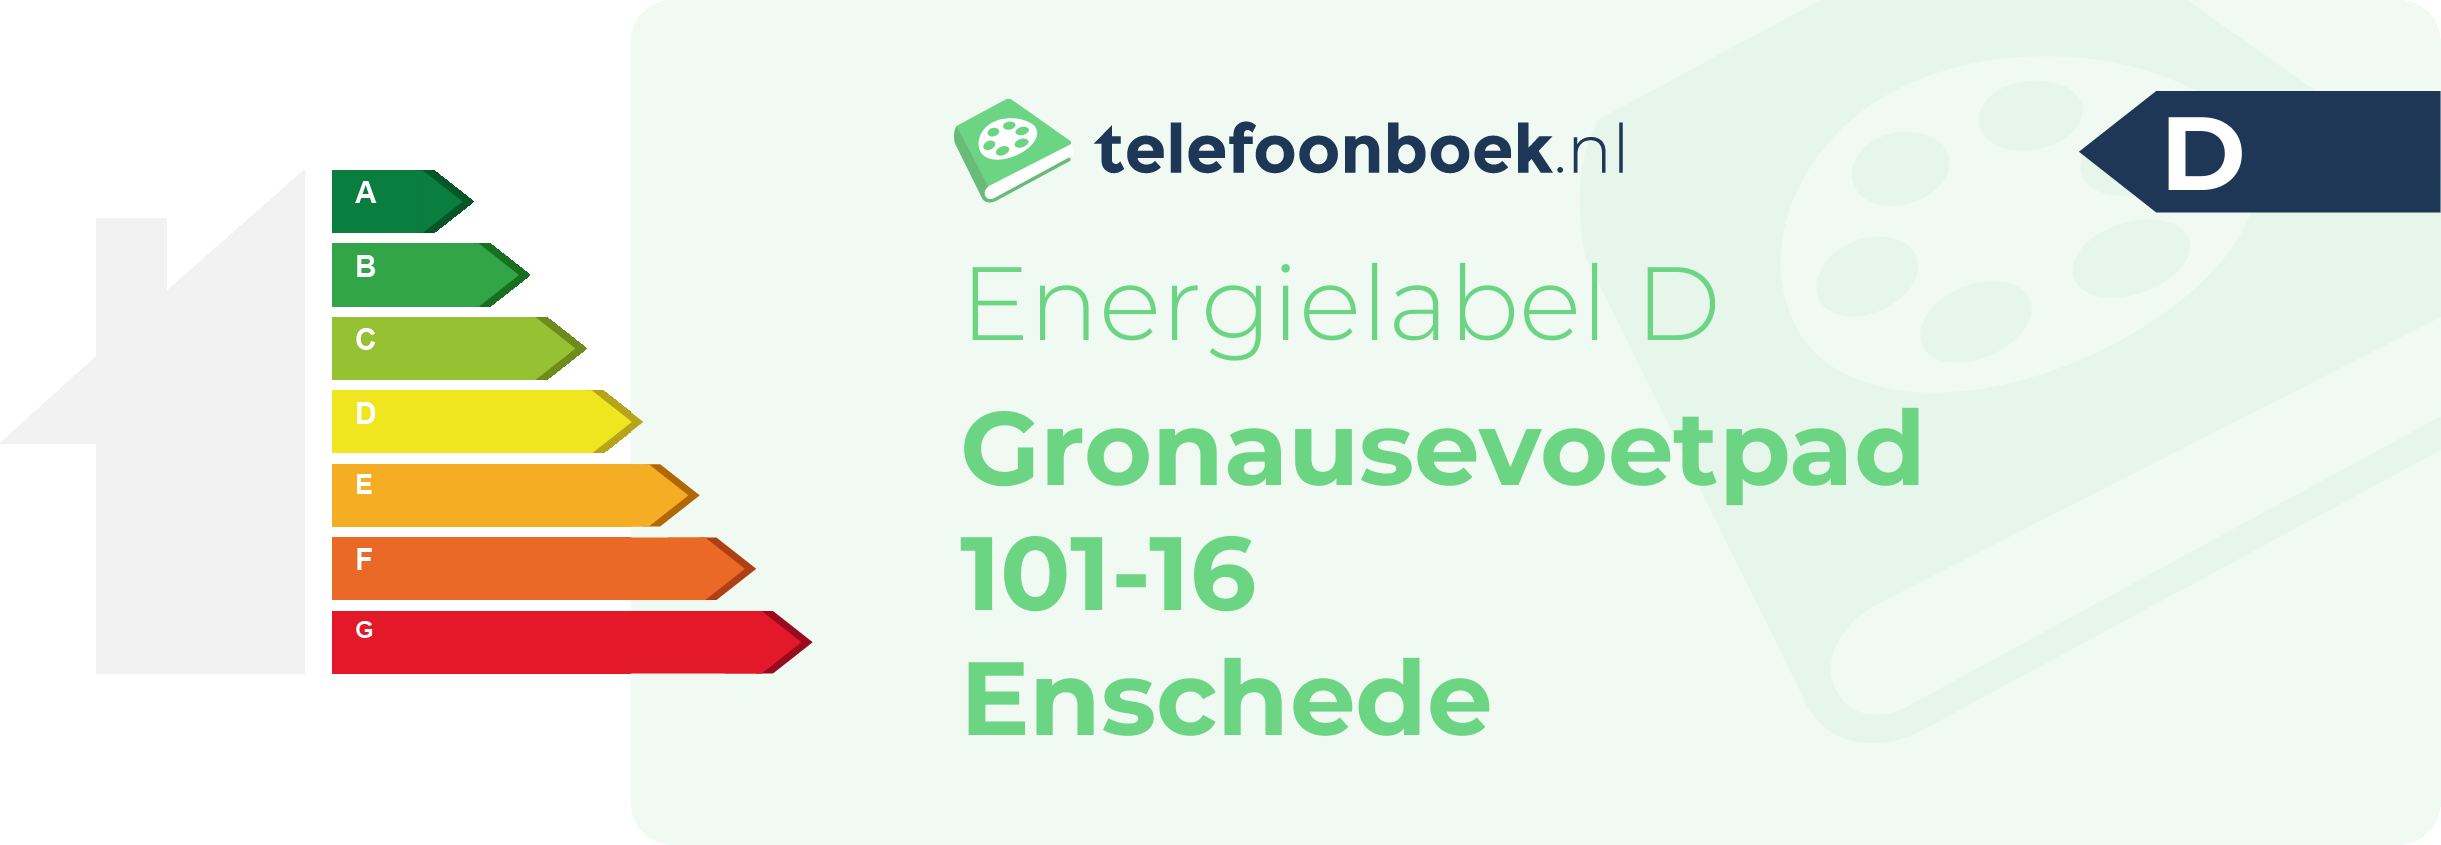 Energielabel Gronausevoetpad 101-16 Enschede